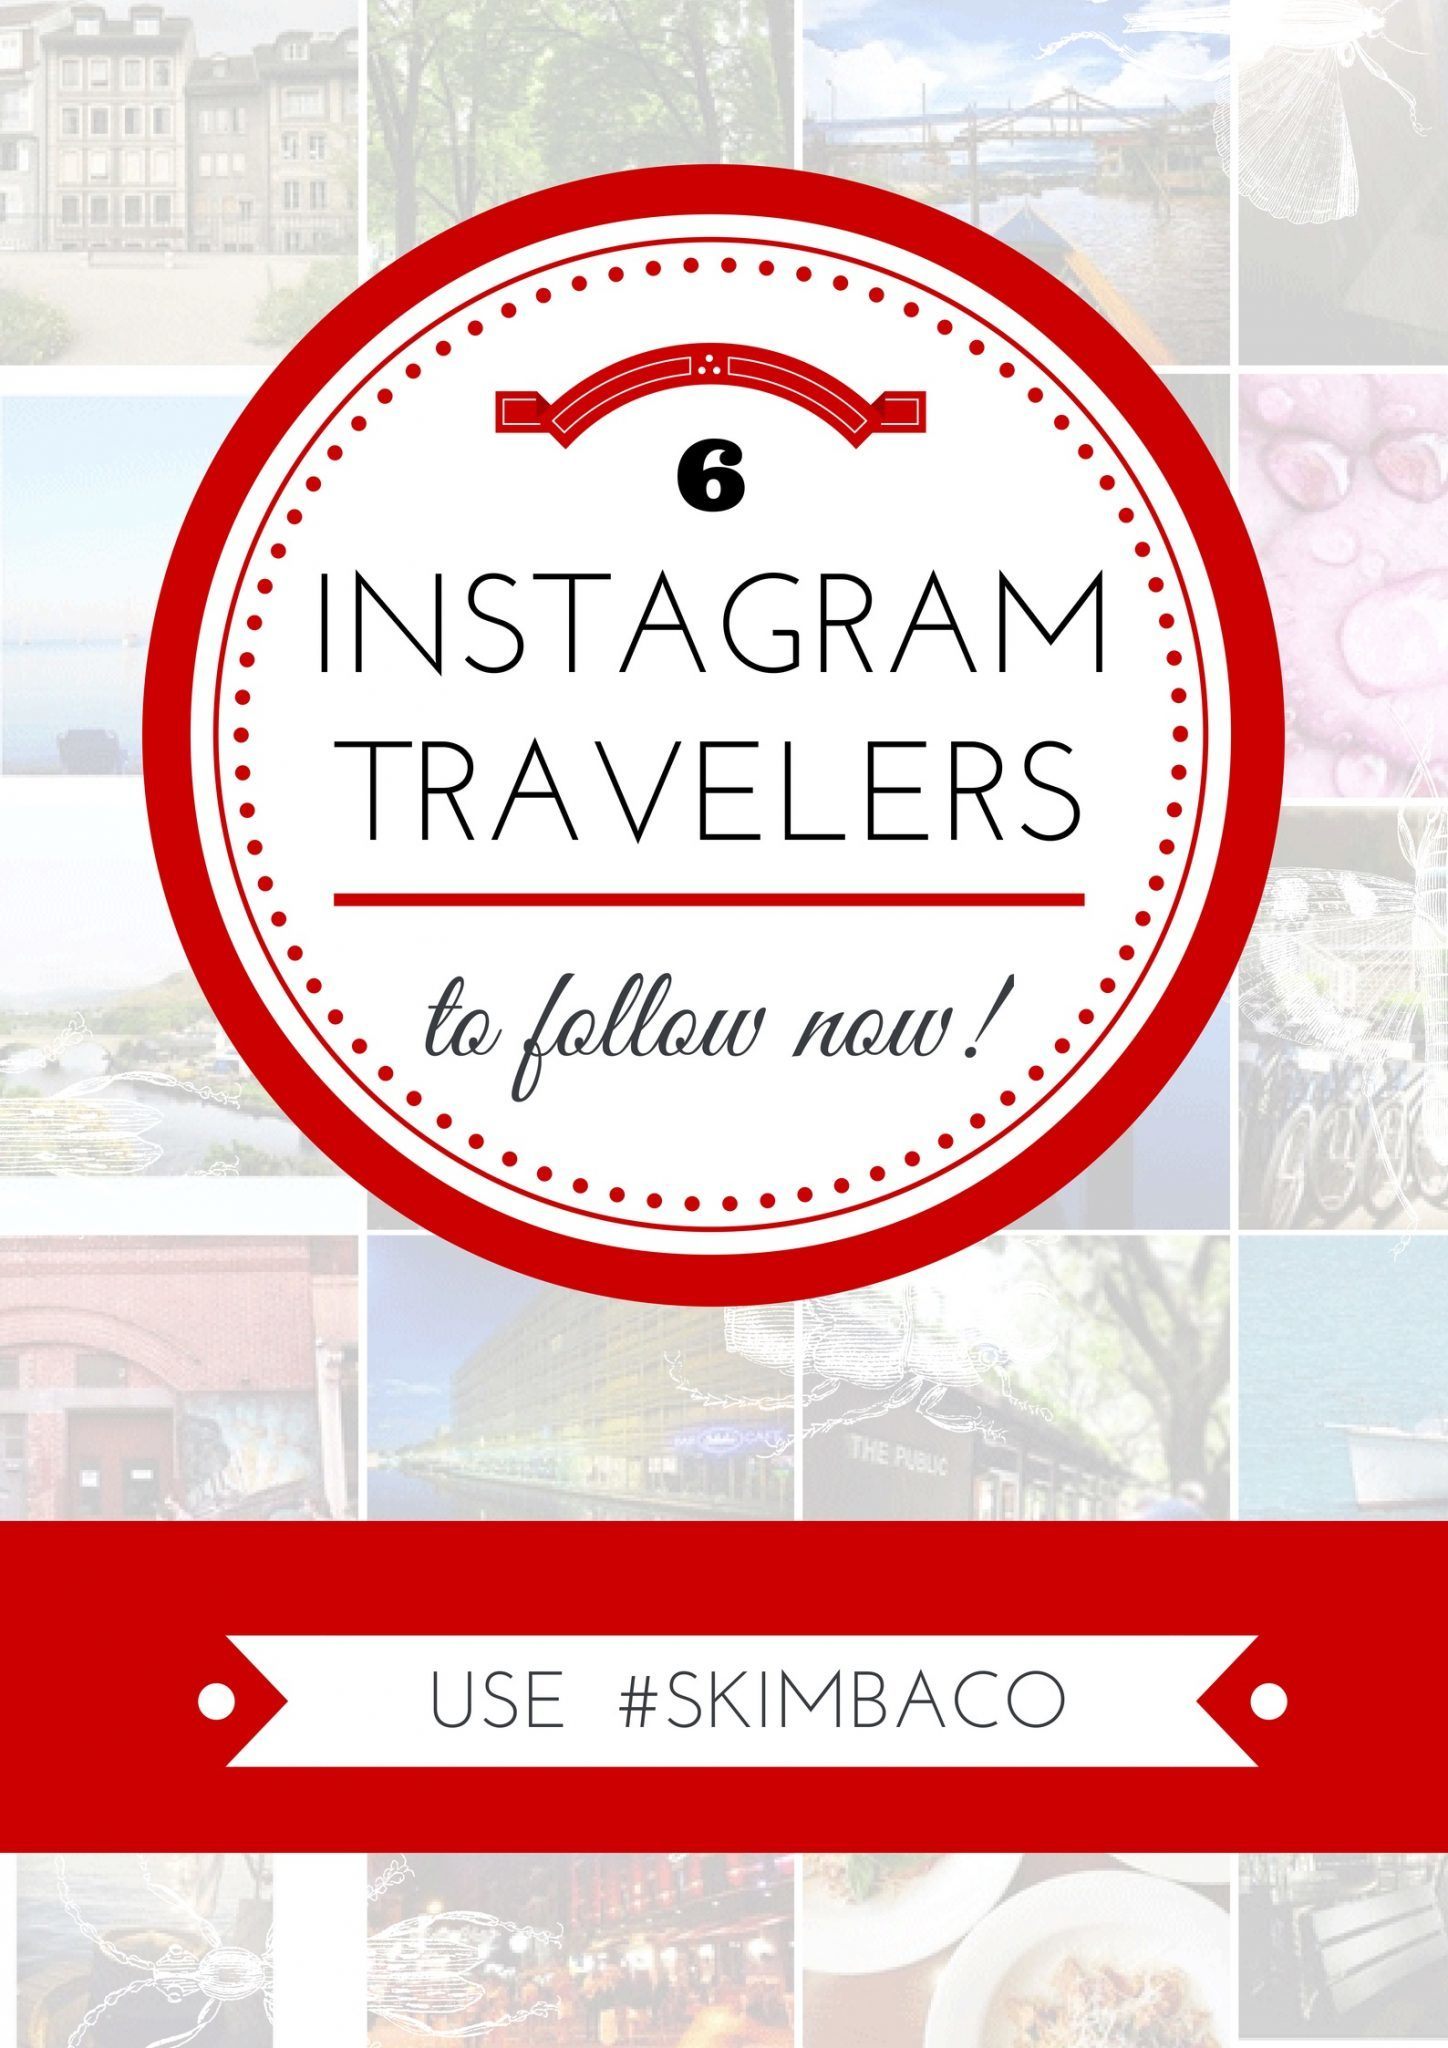 6 amazing travel accounts to follow on Instagram